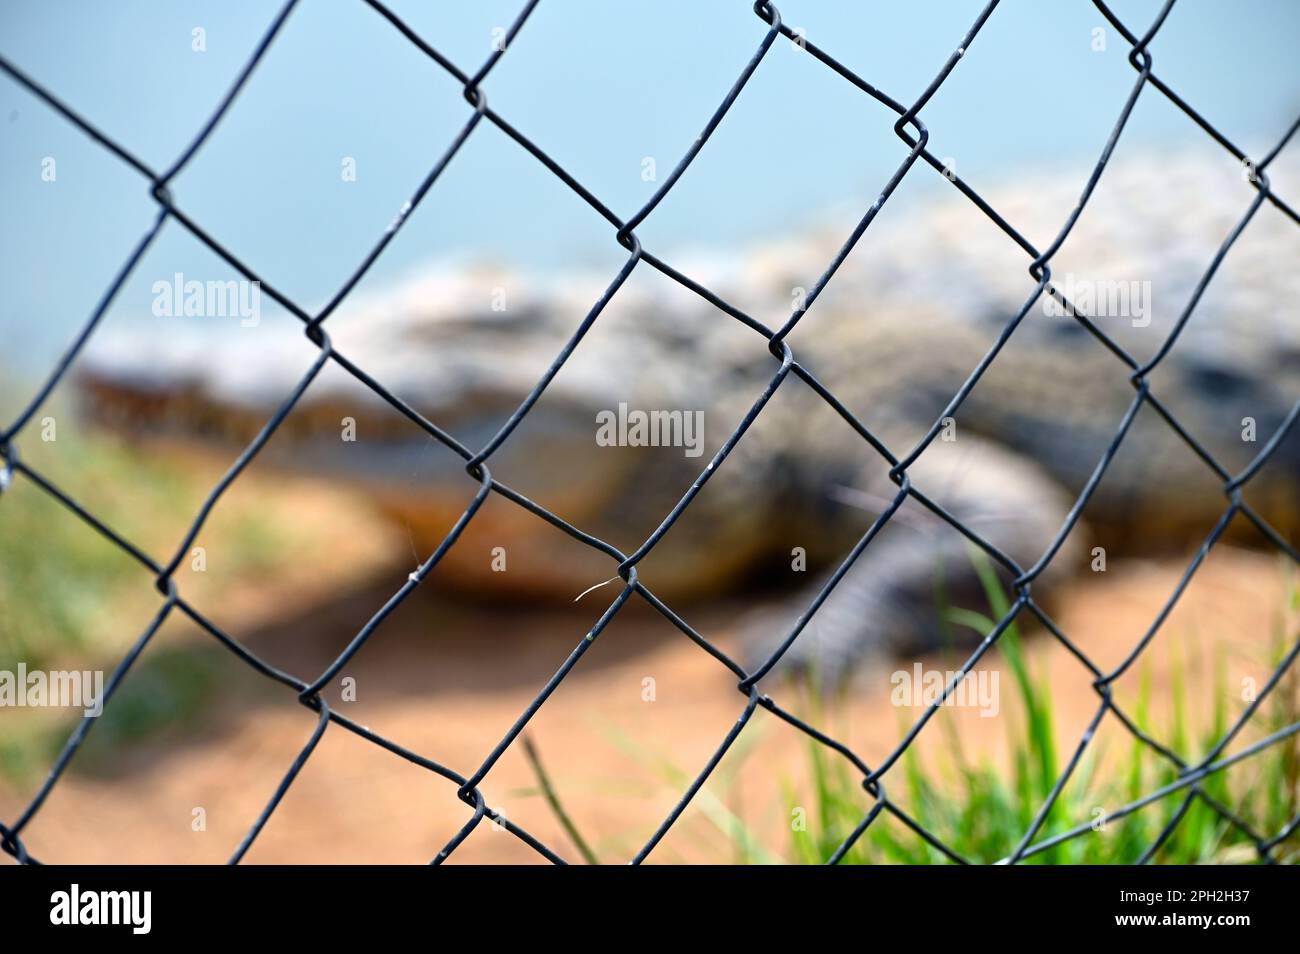 A blurred adult Nile Crocodile behind a fence, at Kalimba Reptile Farm, Lusaka, Zambia, Africa Stock Photo